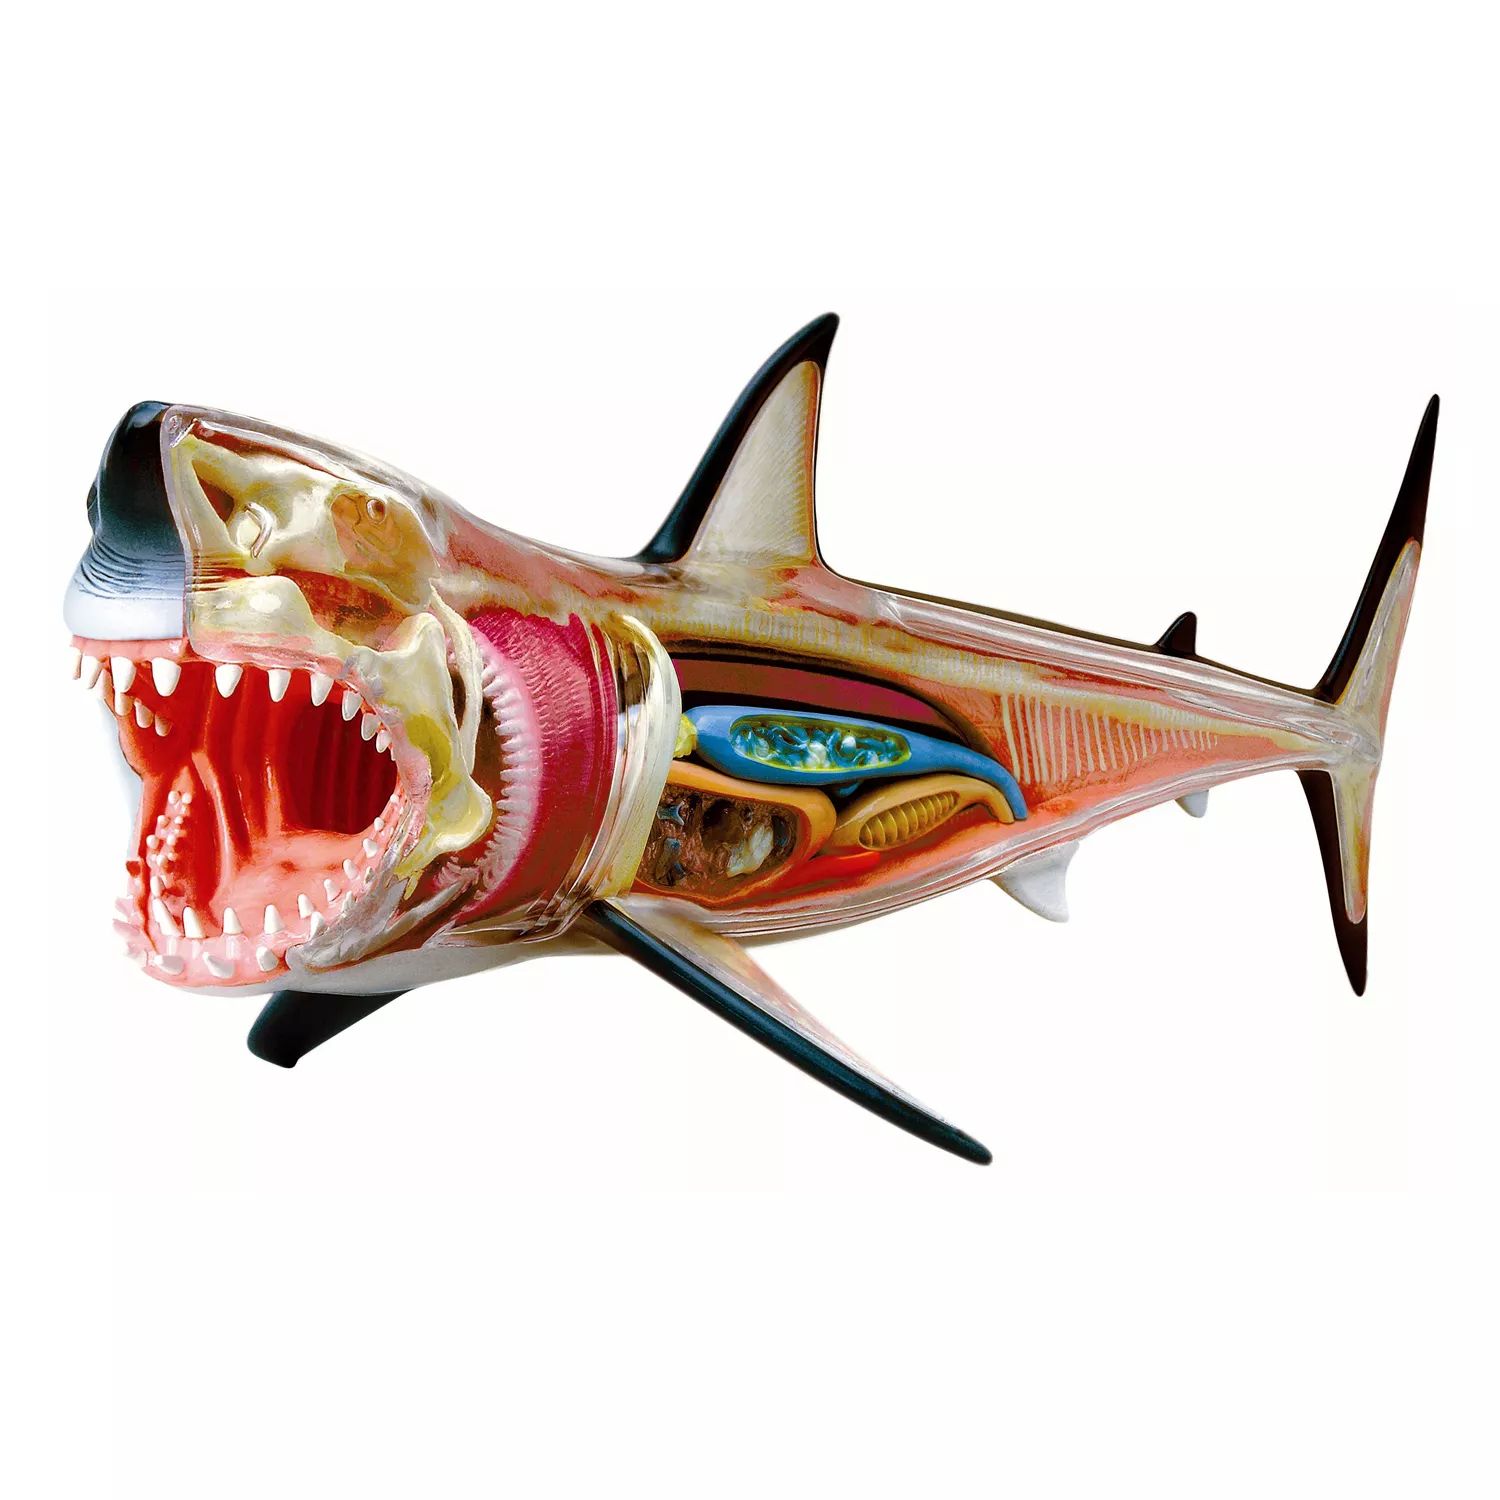 Модель акулы 4D Vision от 4D Master 4D Master